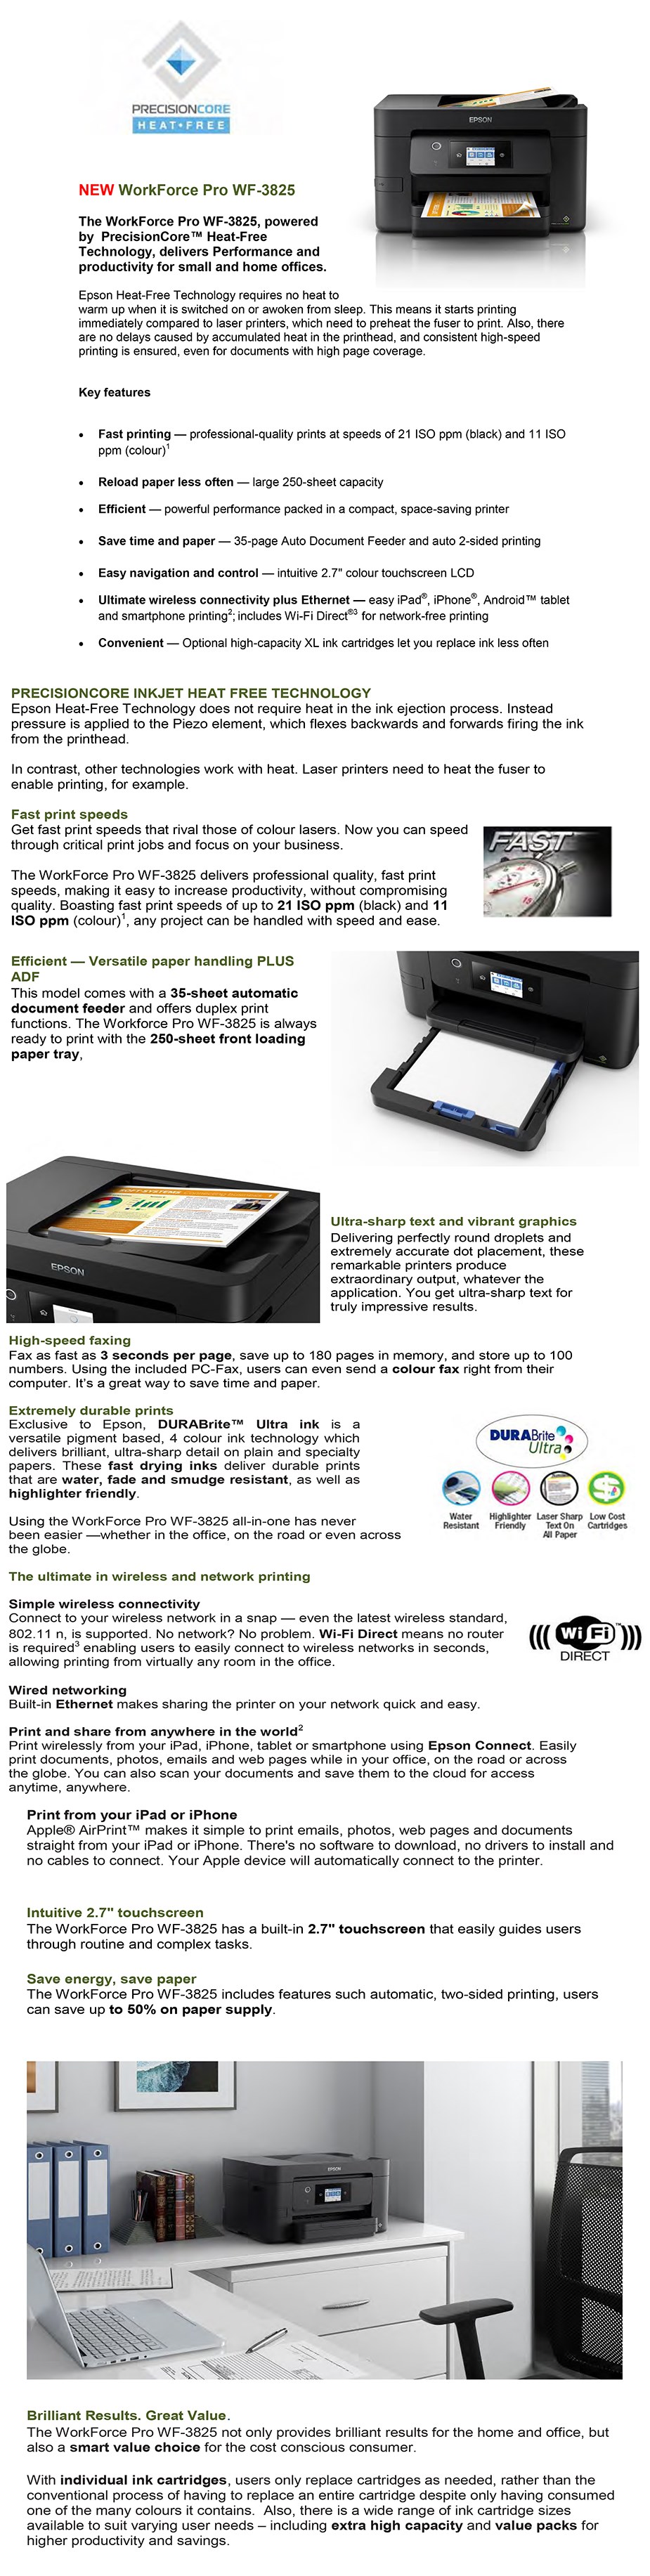 Epson WorkForce Pro WF-3825 A4 Wireless Colour Multifunction Inkjet Printer - Overview 1